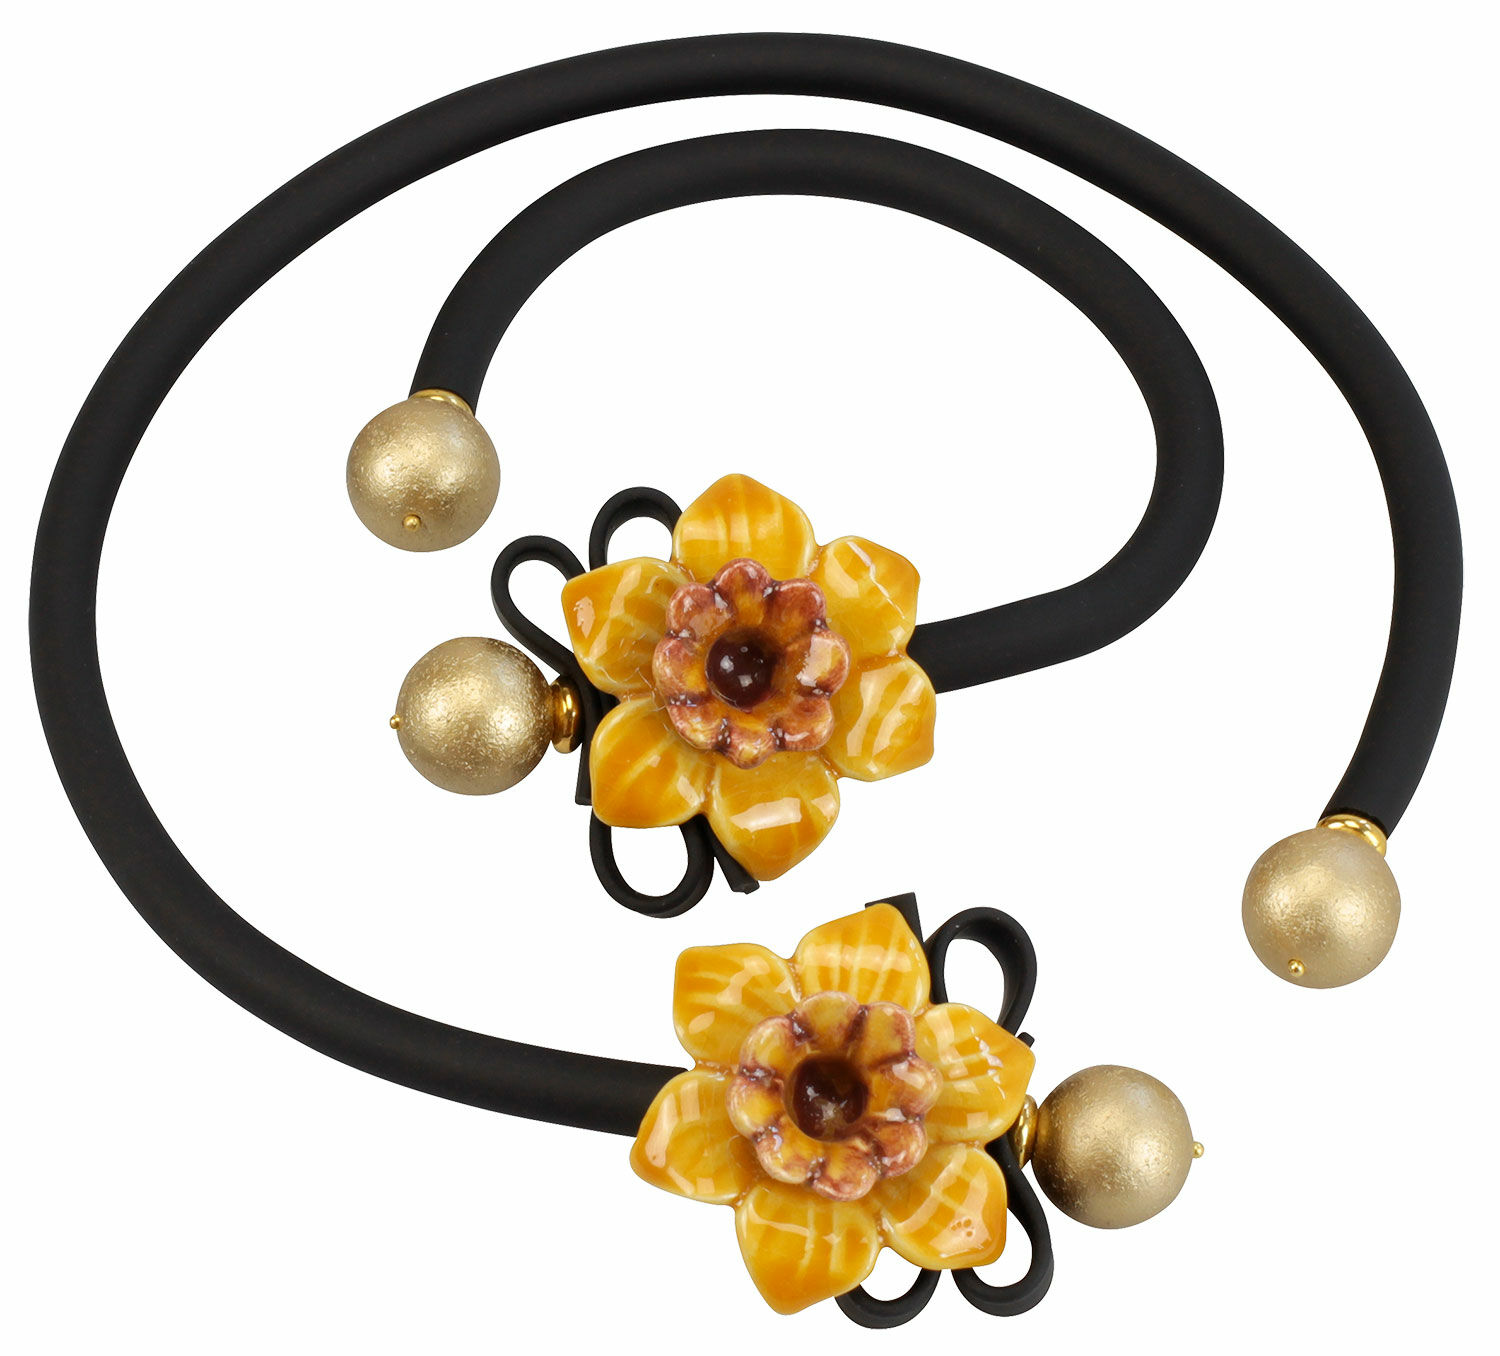 Jewellery set "Daffodil" by Anna Mütz